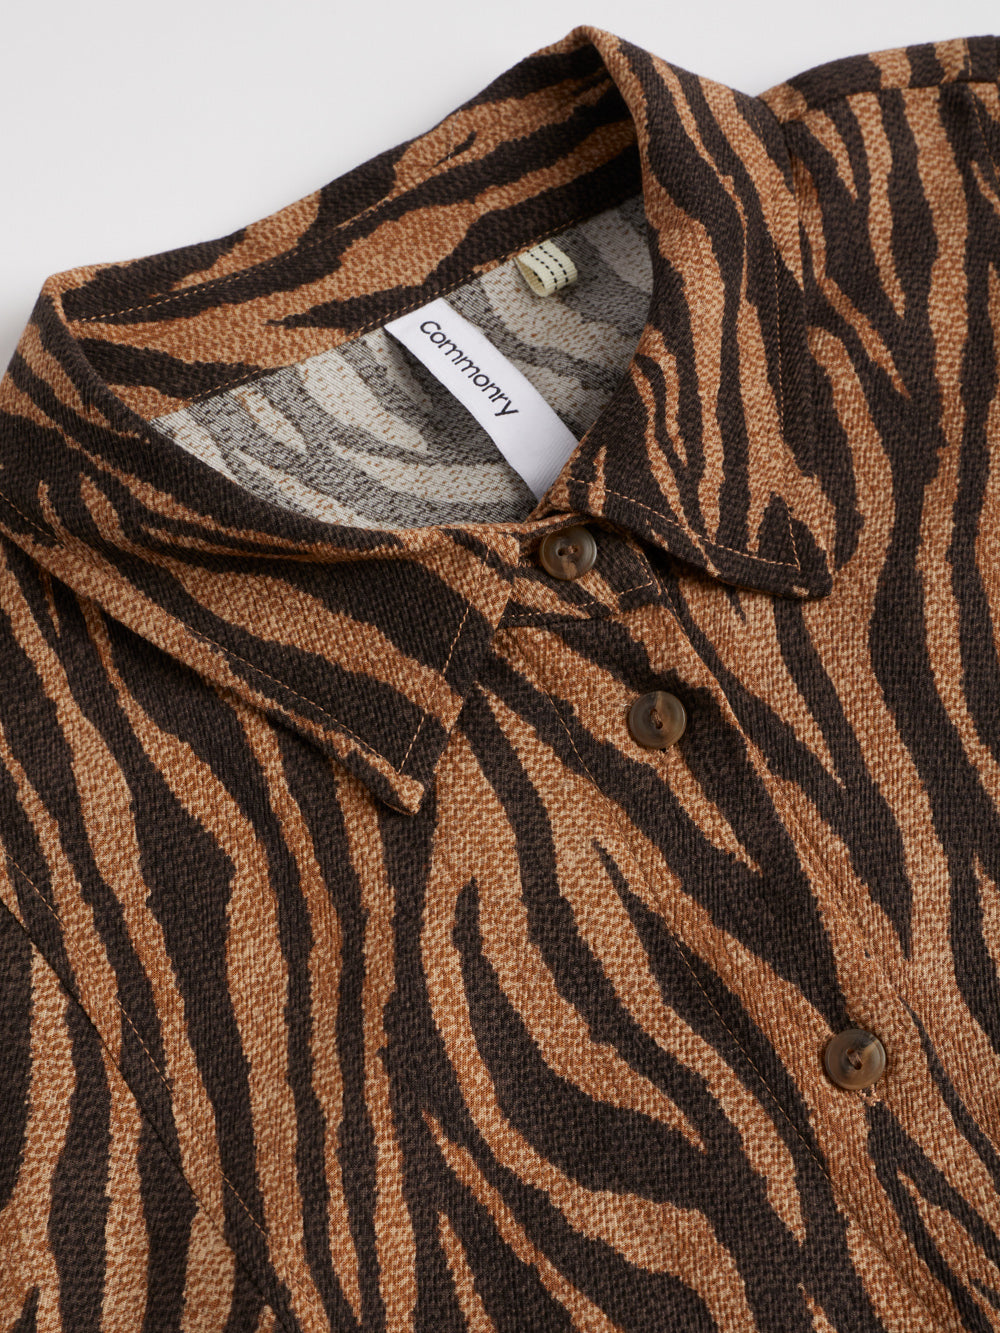 The Tiger Print Shirt Dress